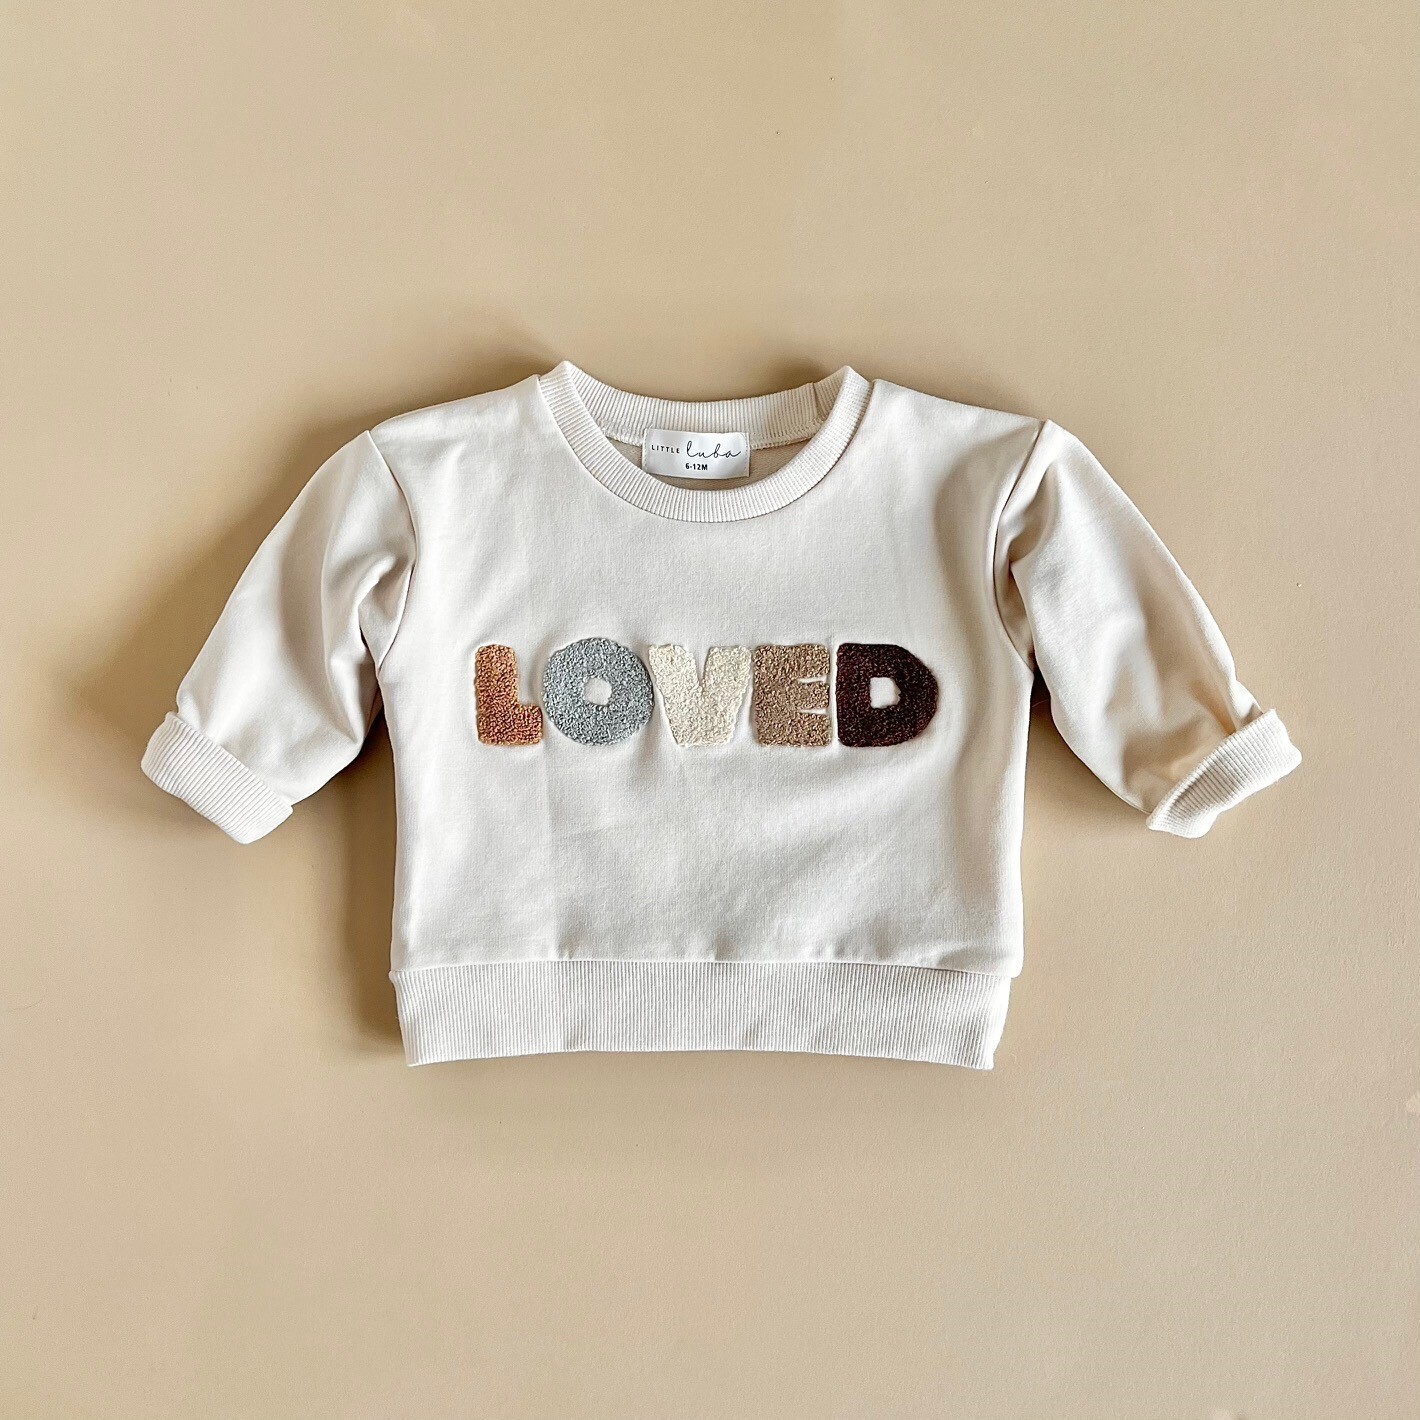 Sweatshirt - Fuzzy Love Letters, Color: Fuzzy Love, Size: 3-6M